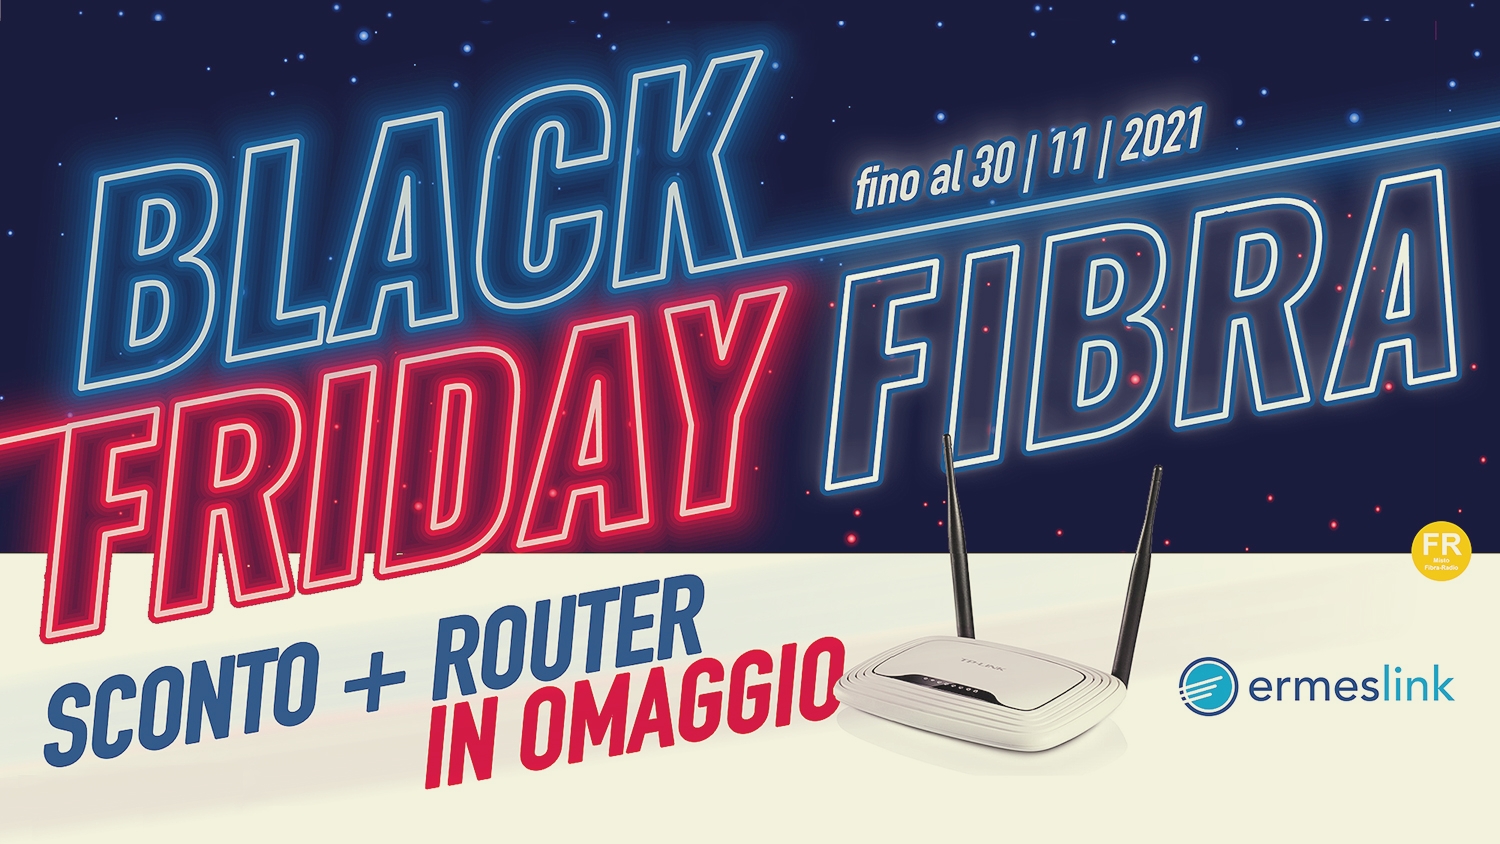 black friday fibra ermeslink risparmia fino a 124€/anno